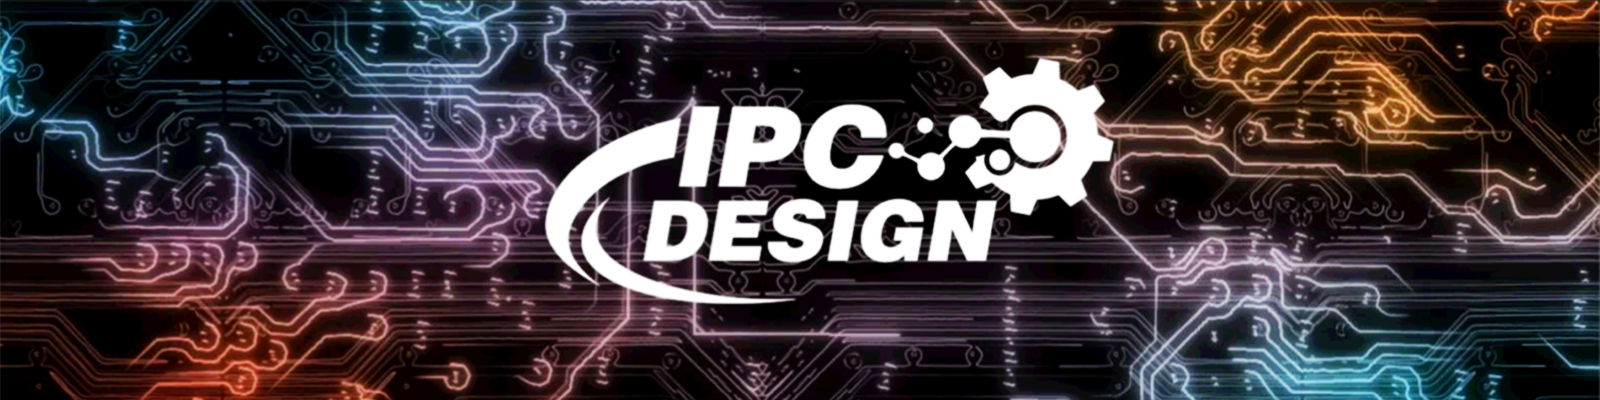 IPC Design Logo and Header